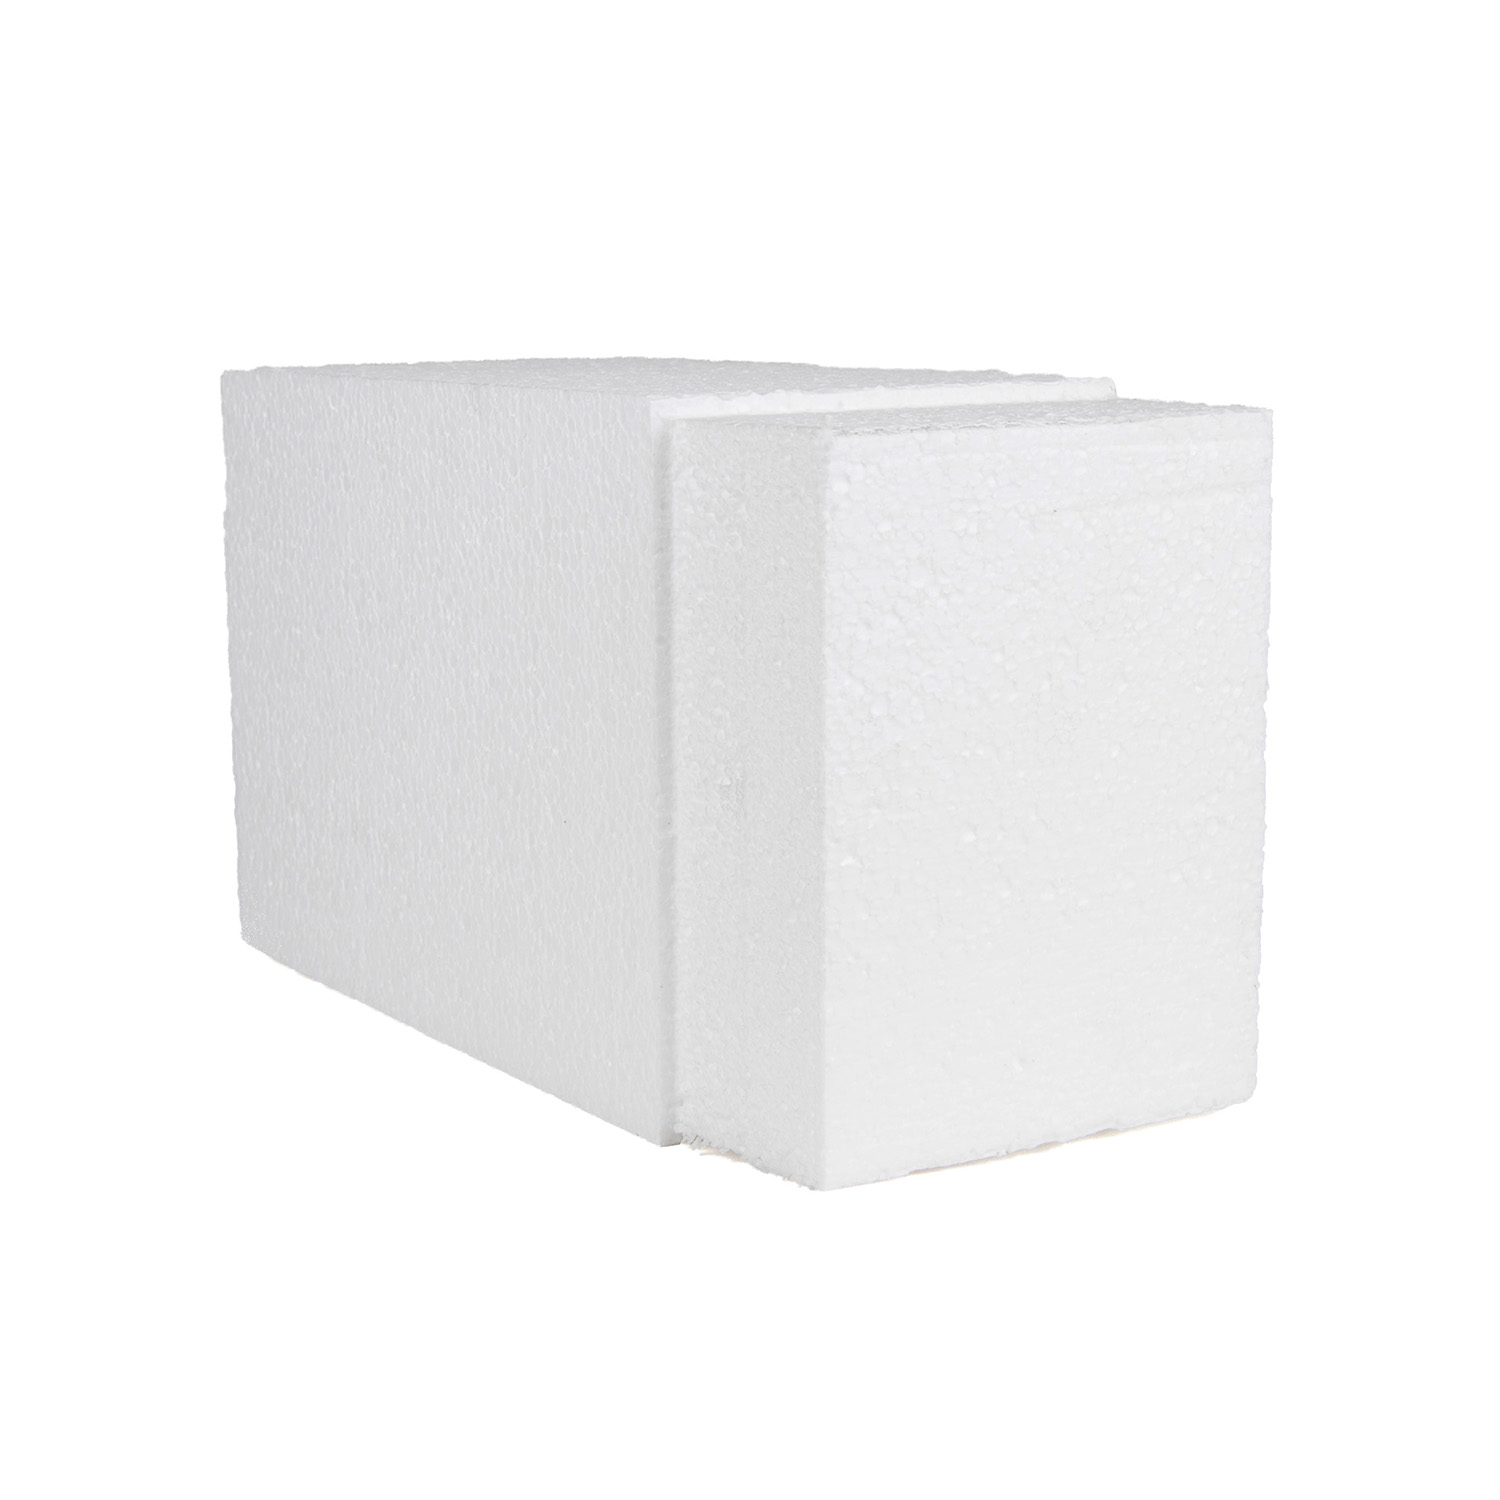 GF4 Casting form polystyrene for inner size 160x120mm